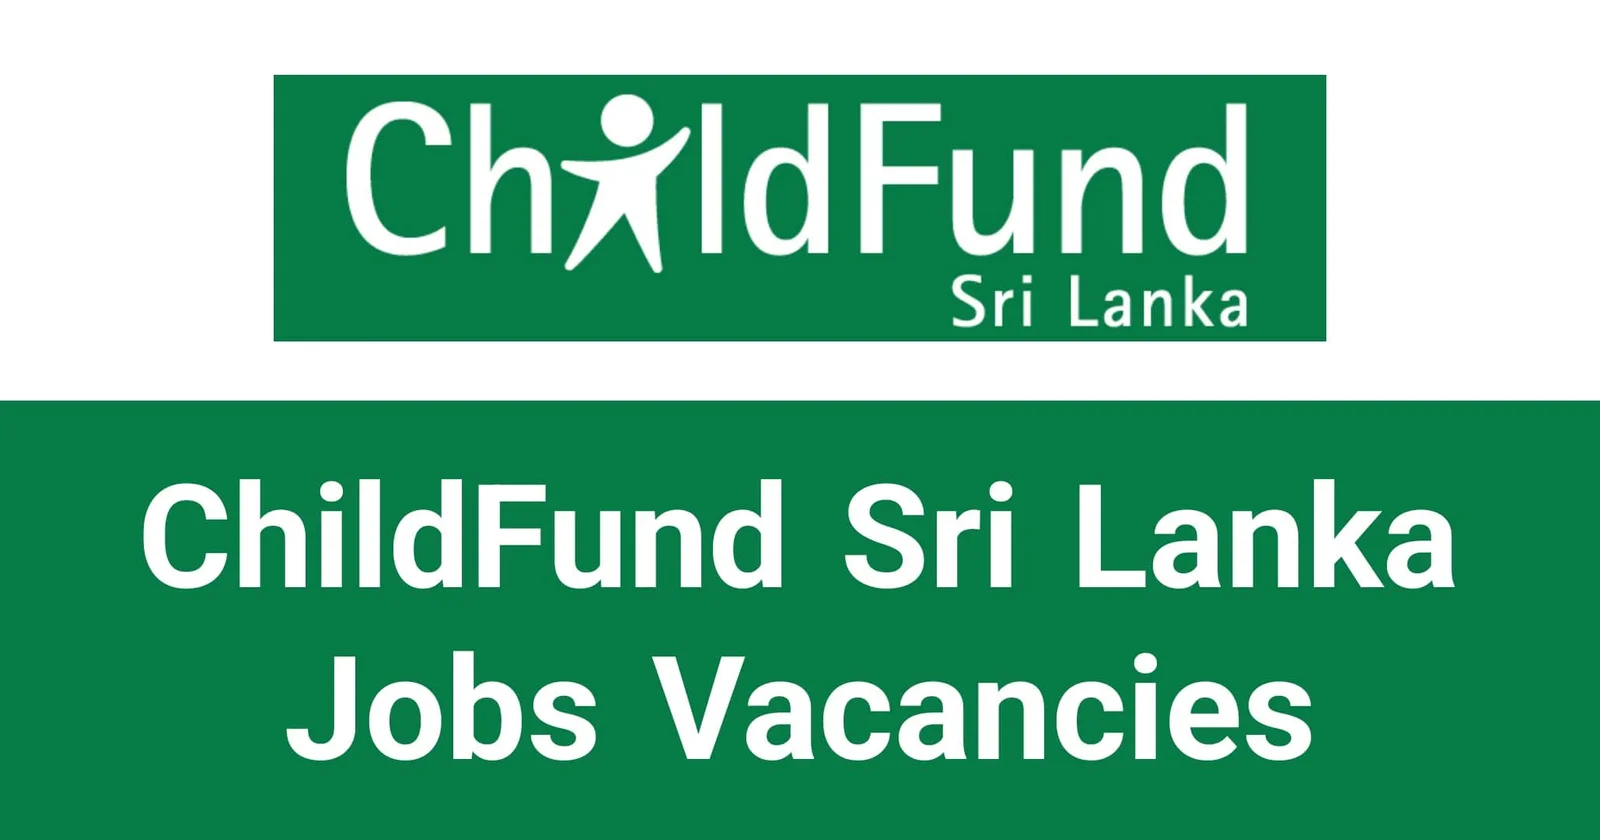 ChildFund Sri Lanka Jobs Vacancies